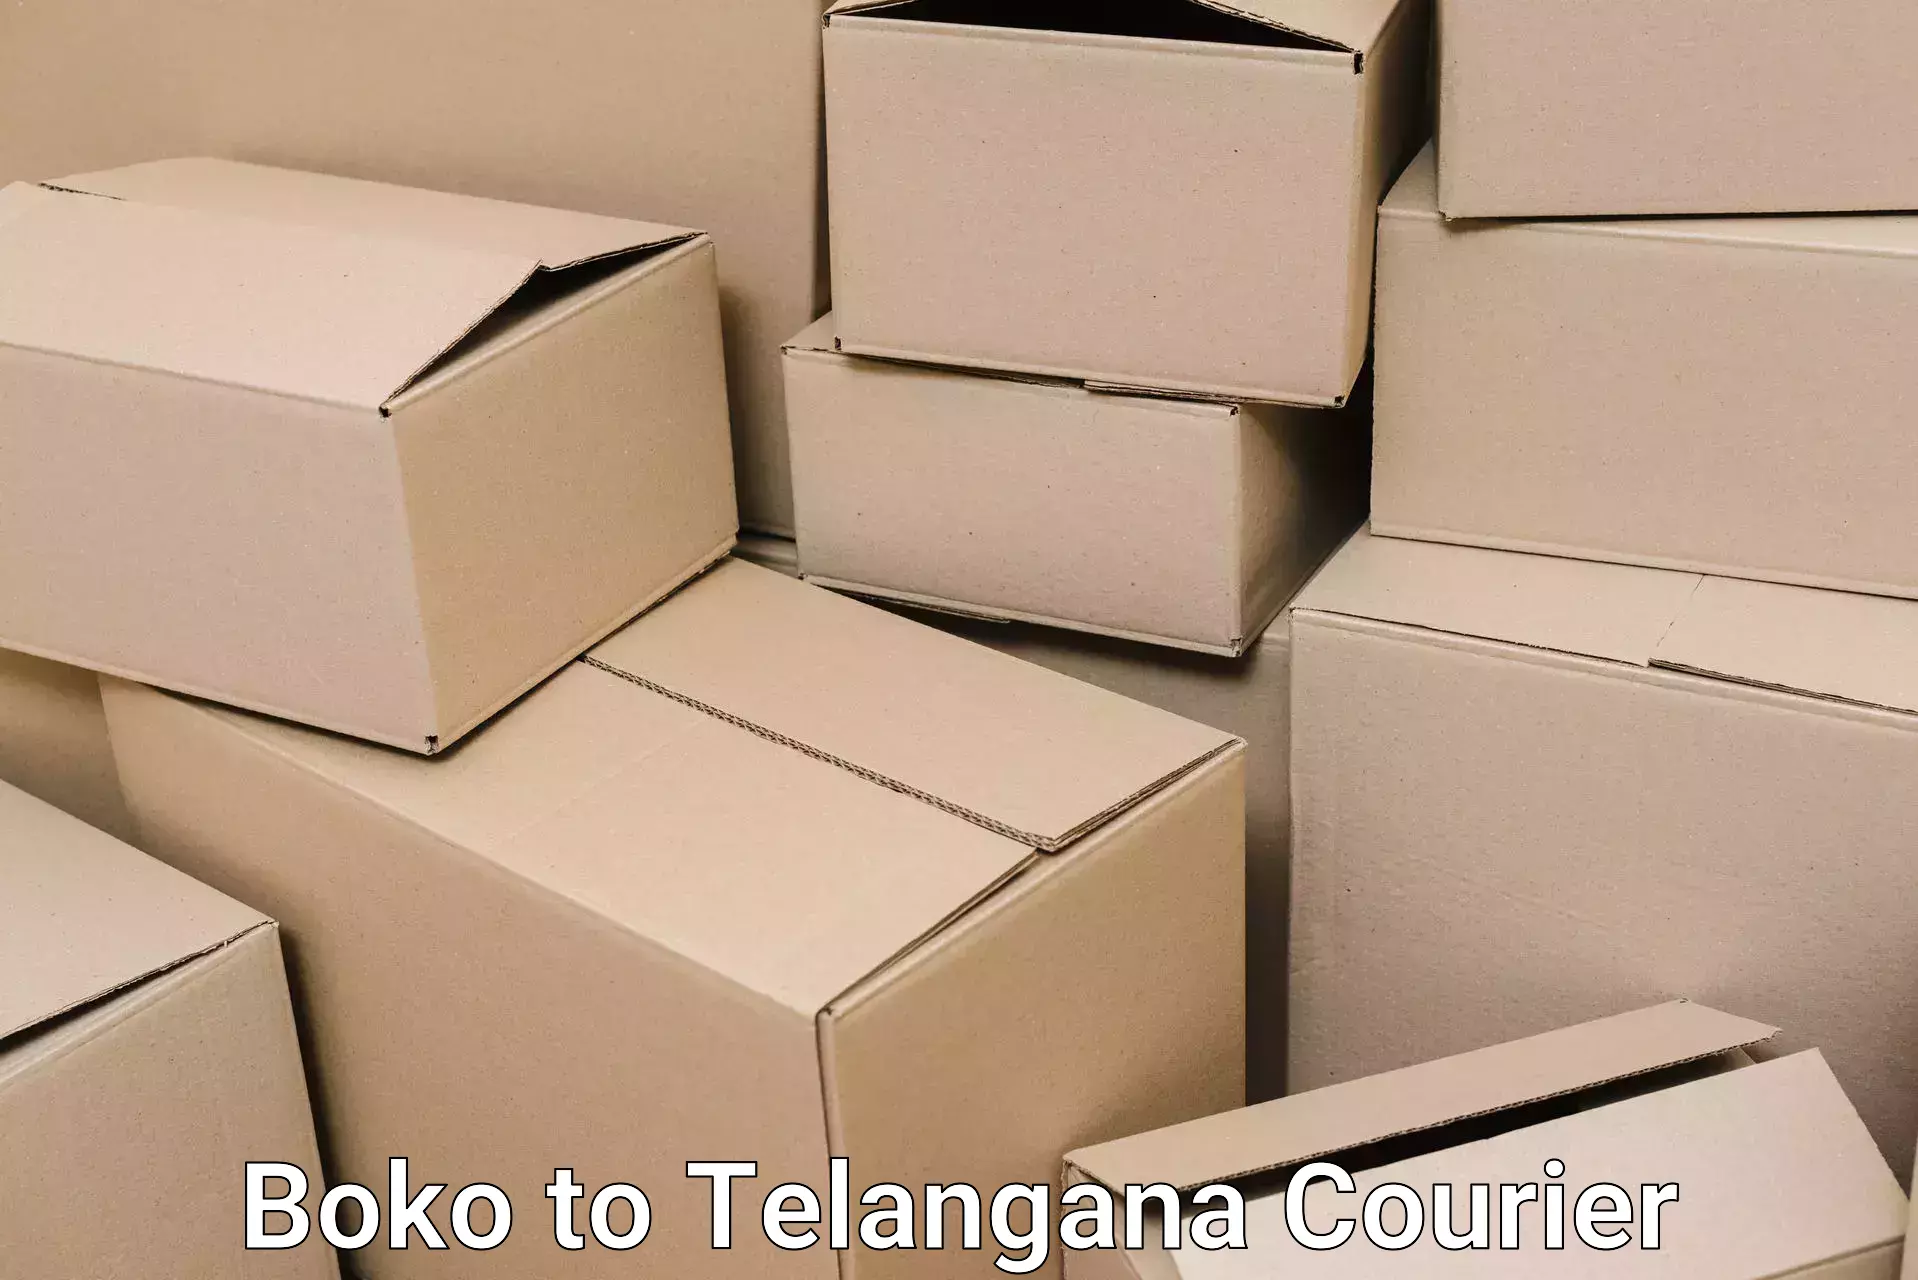 Moving and packing experts Boko to Gangadhara